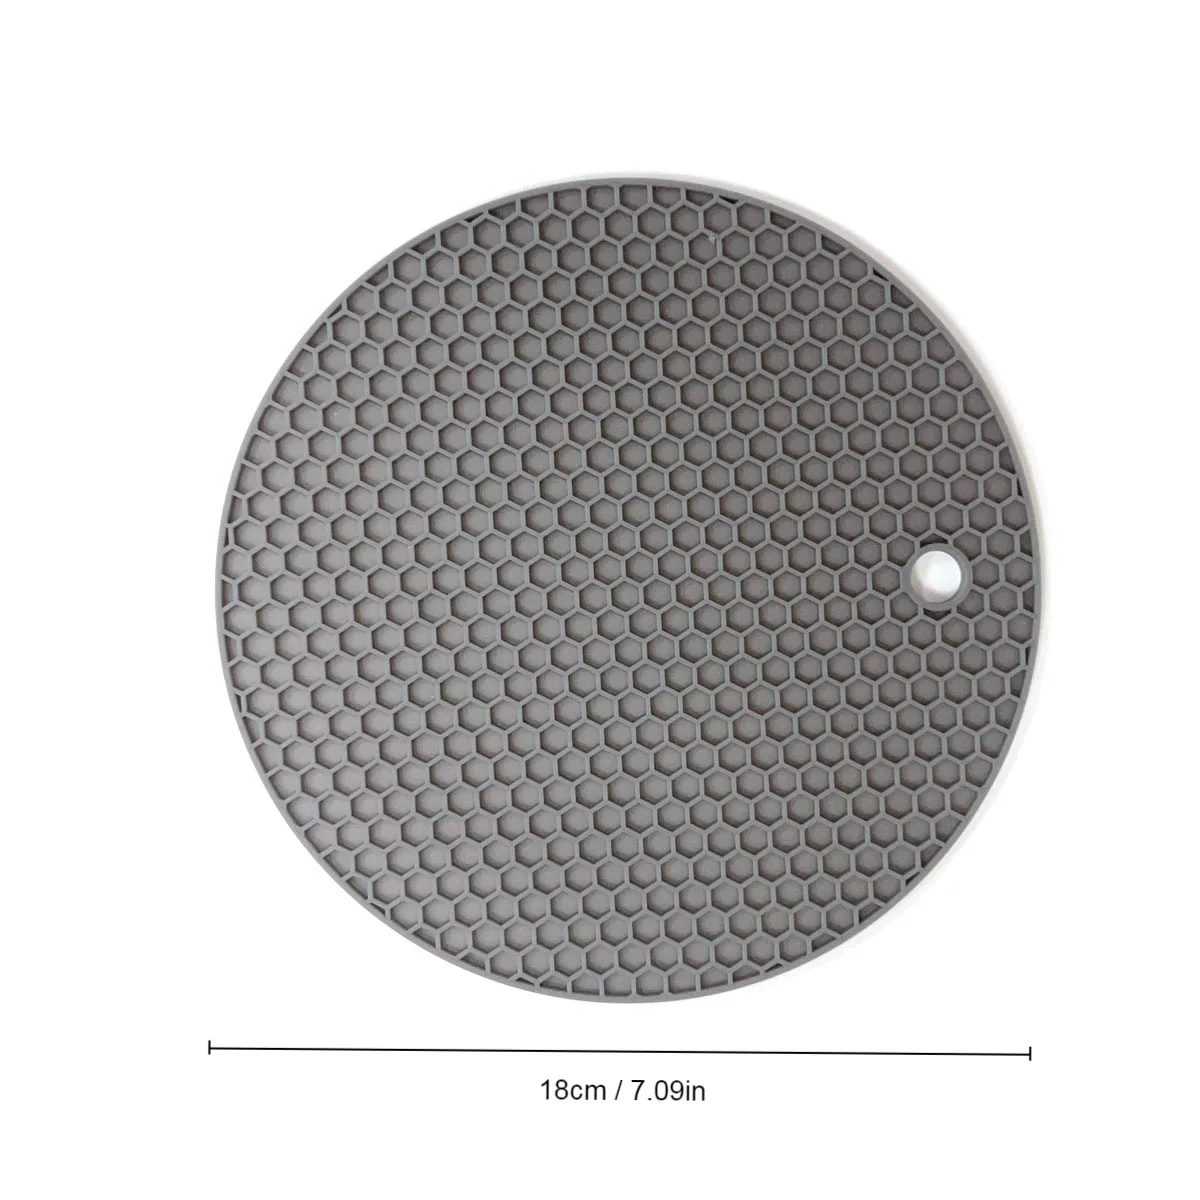 Silicone anti scald pad high temperature resistant non-skid mat dish silicone insulation pad